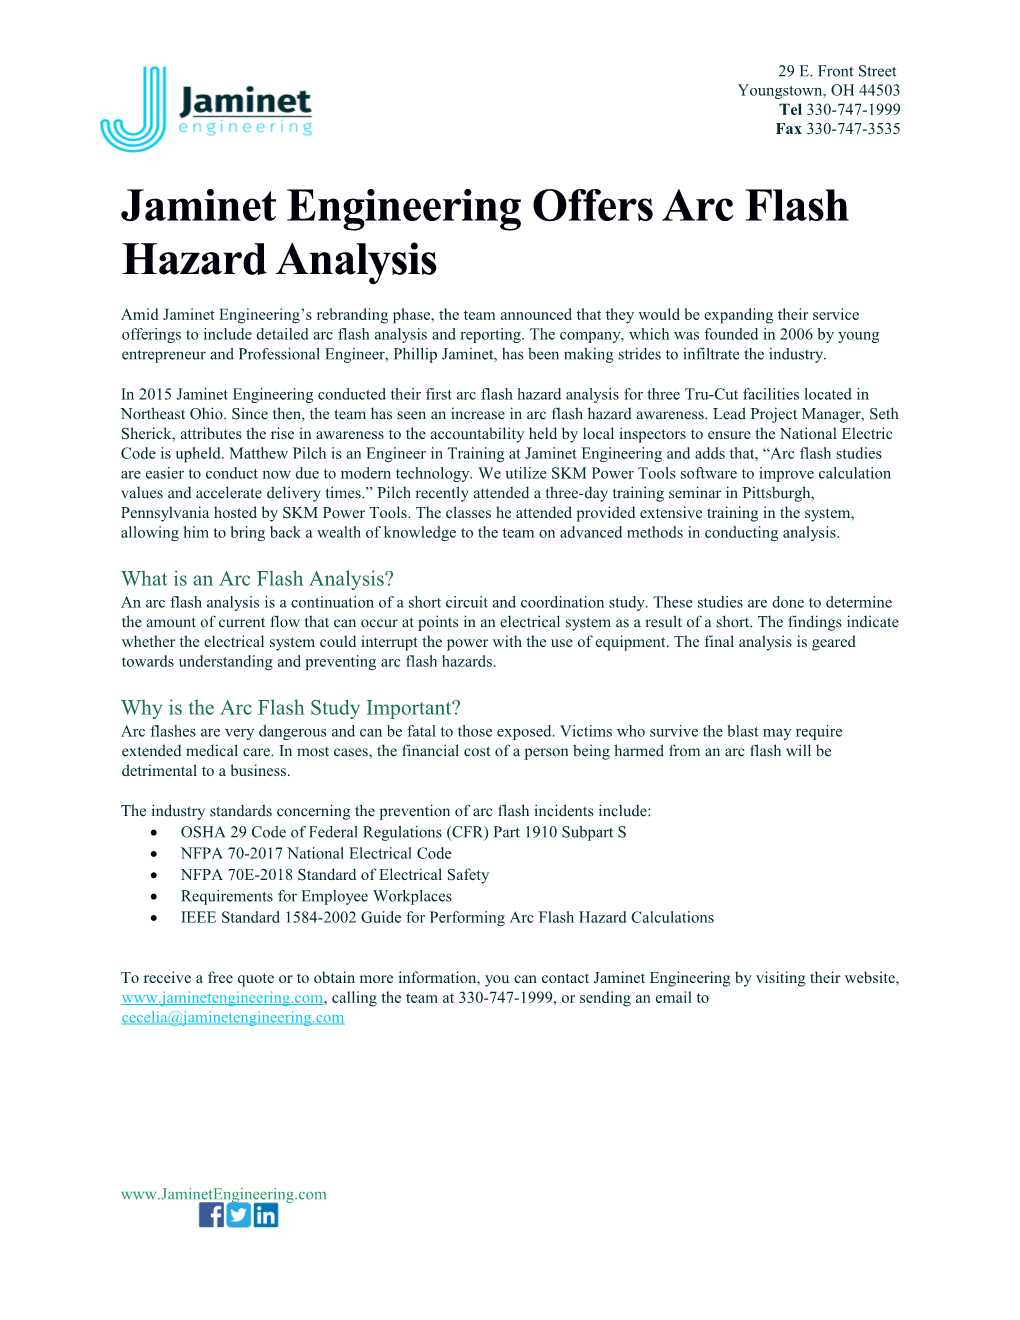 Jaminet Engineering Offers Arc Flash Hazard Analysis